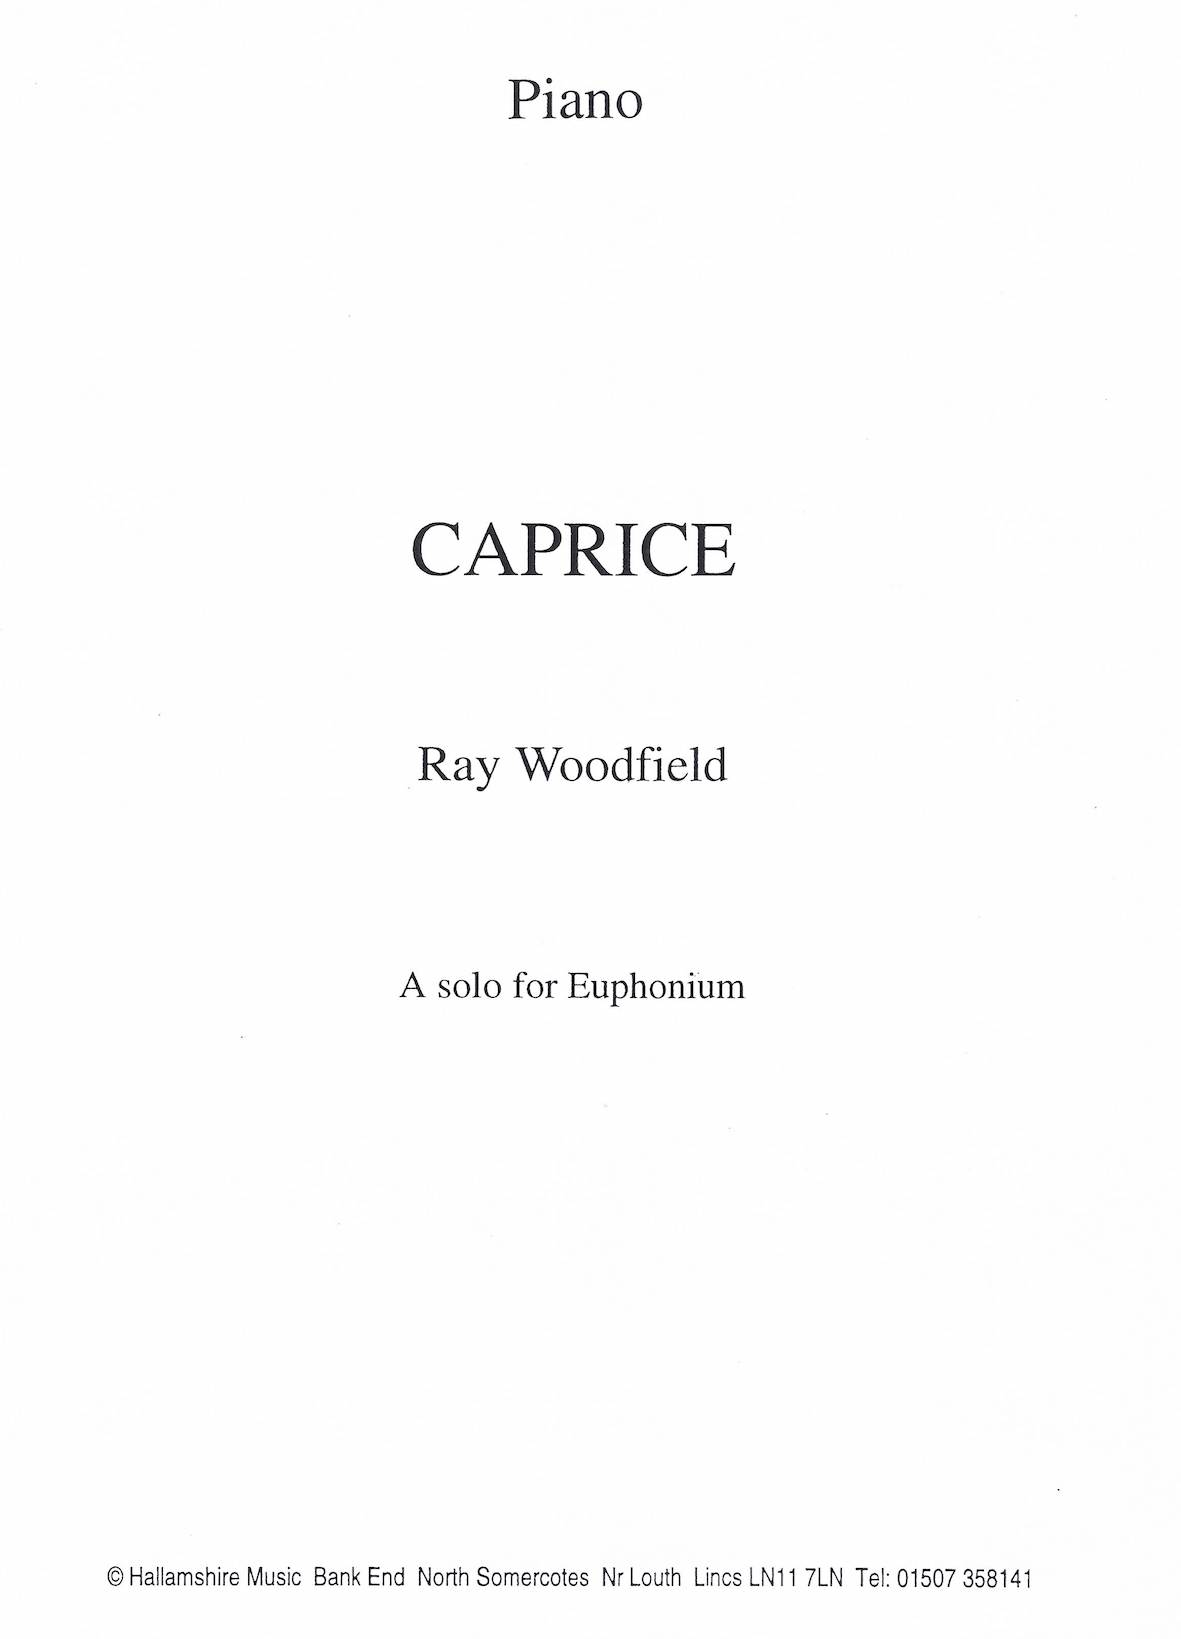 Caprice - Ray Woodfield - Euphonium and Piano